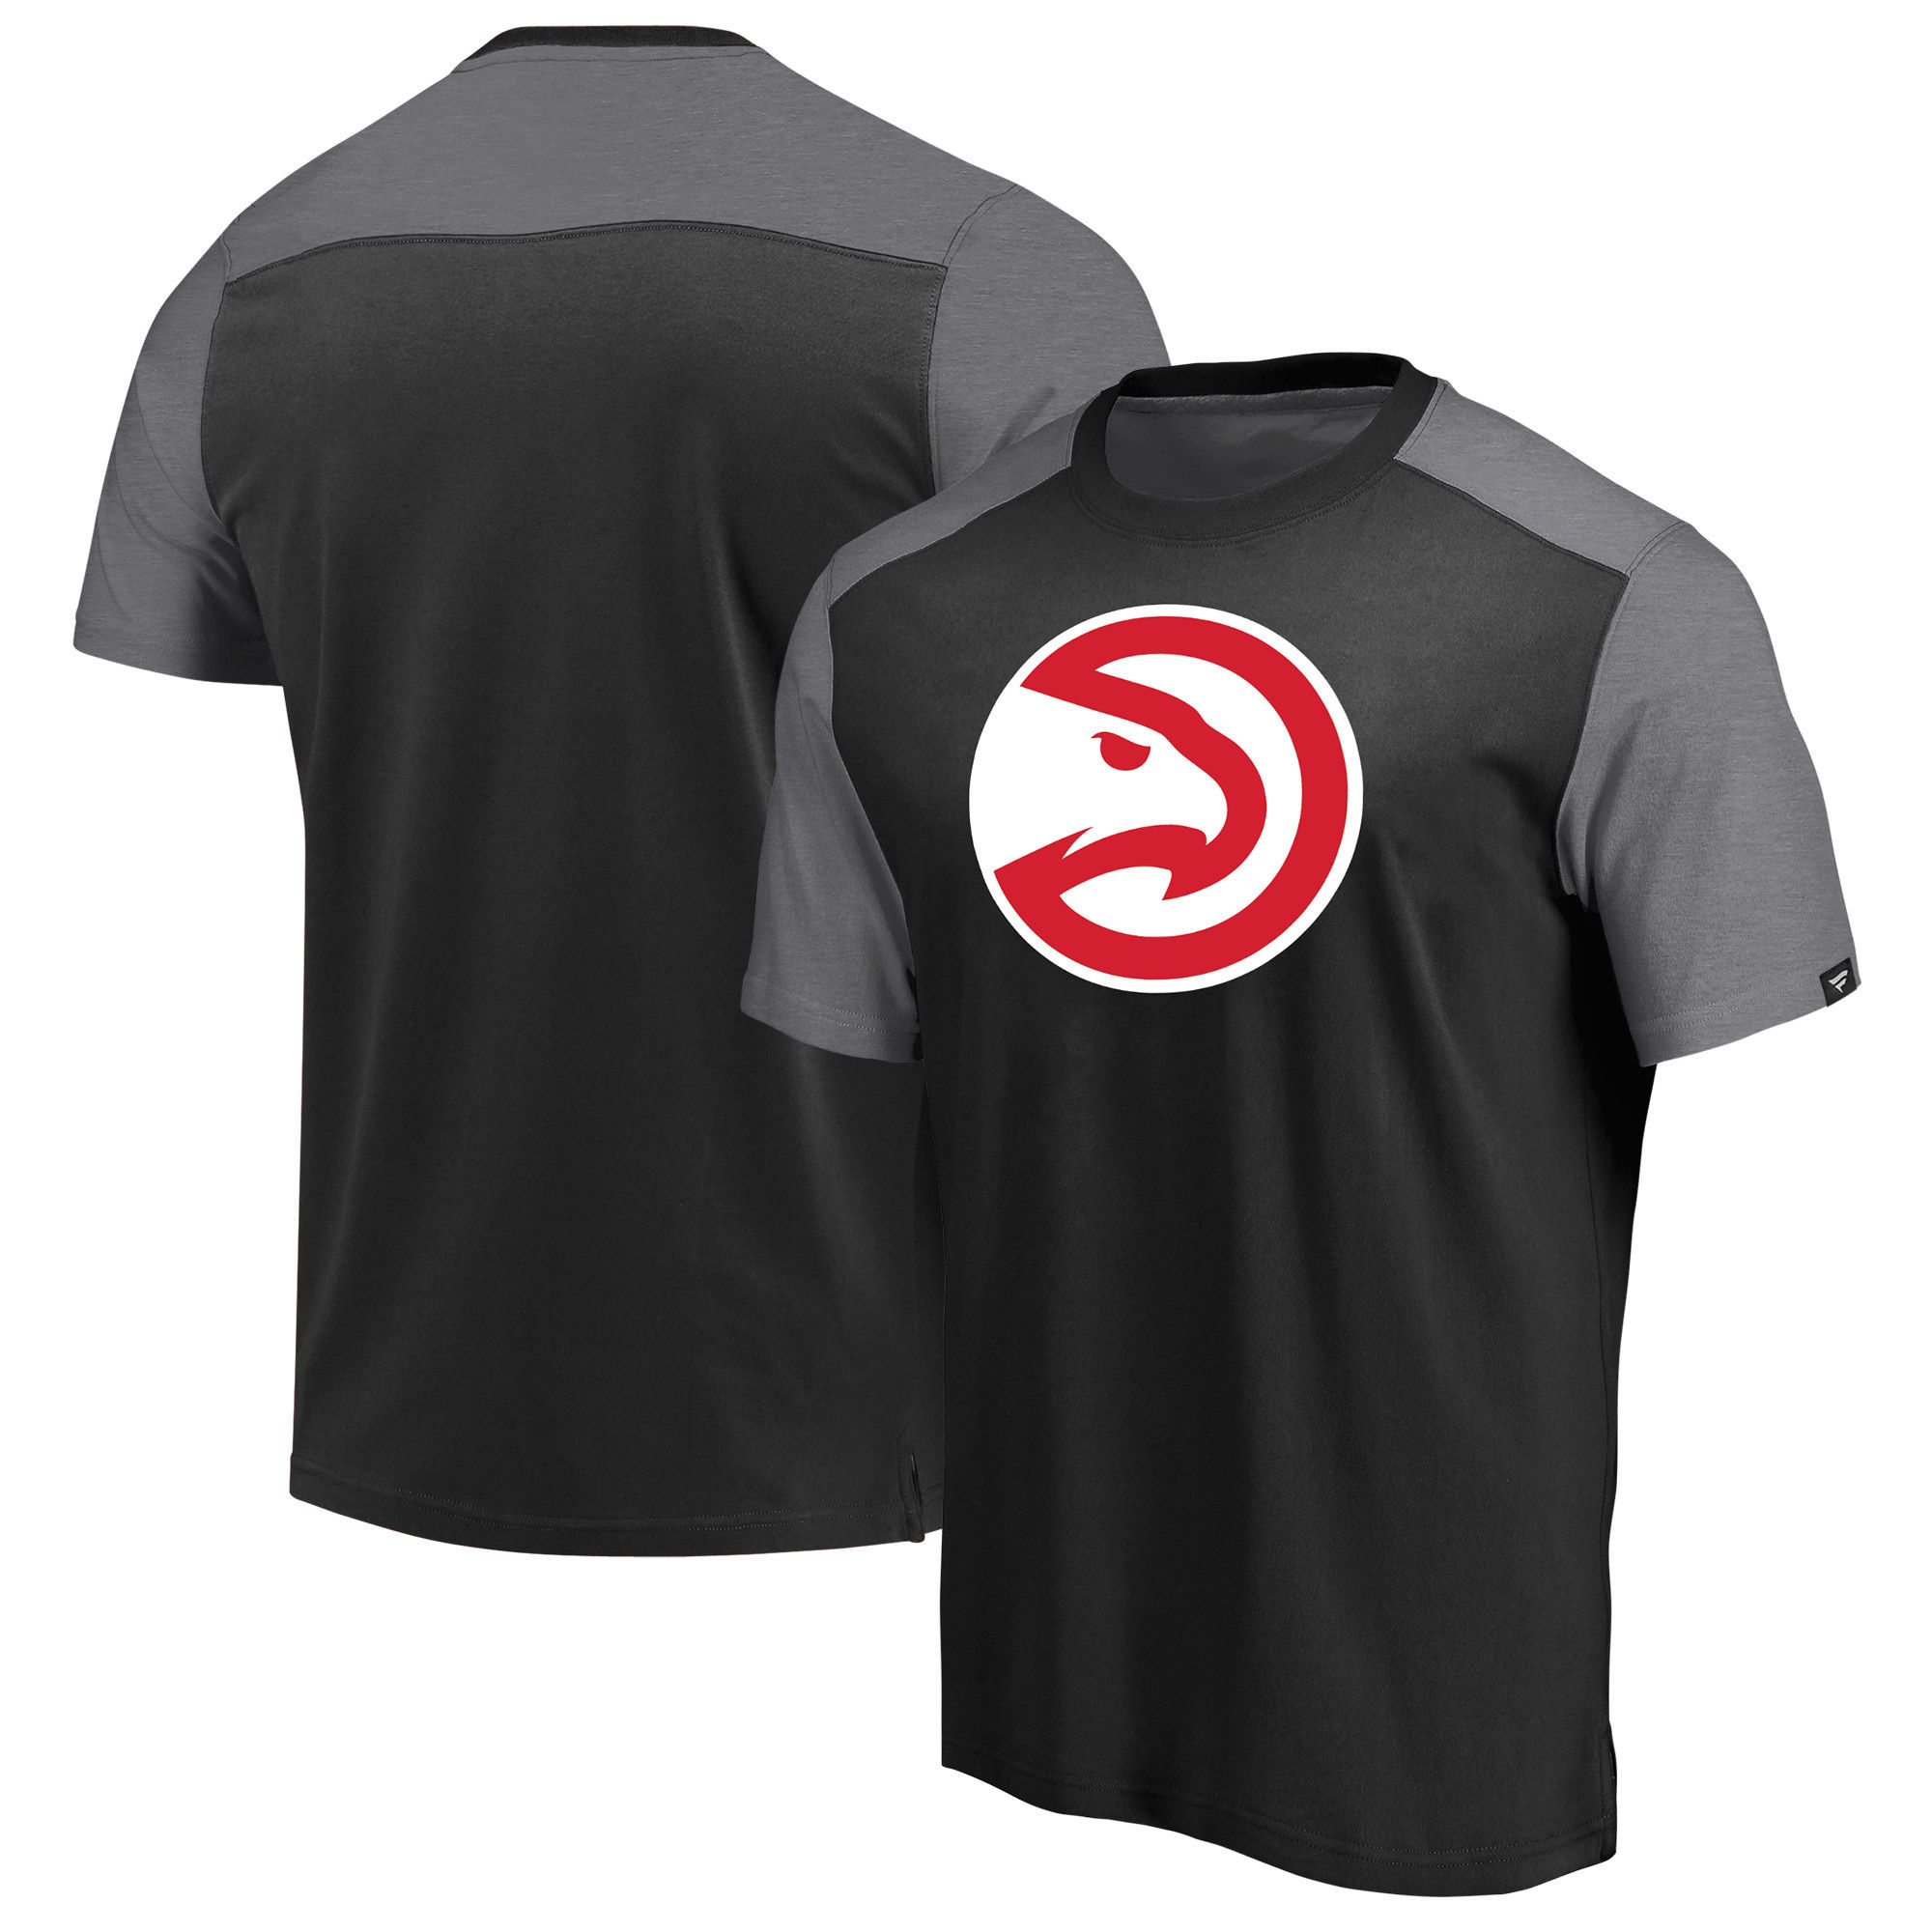 Atlanta Hawks Fanatics Branded Iconic Blocked T-Shirt Black